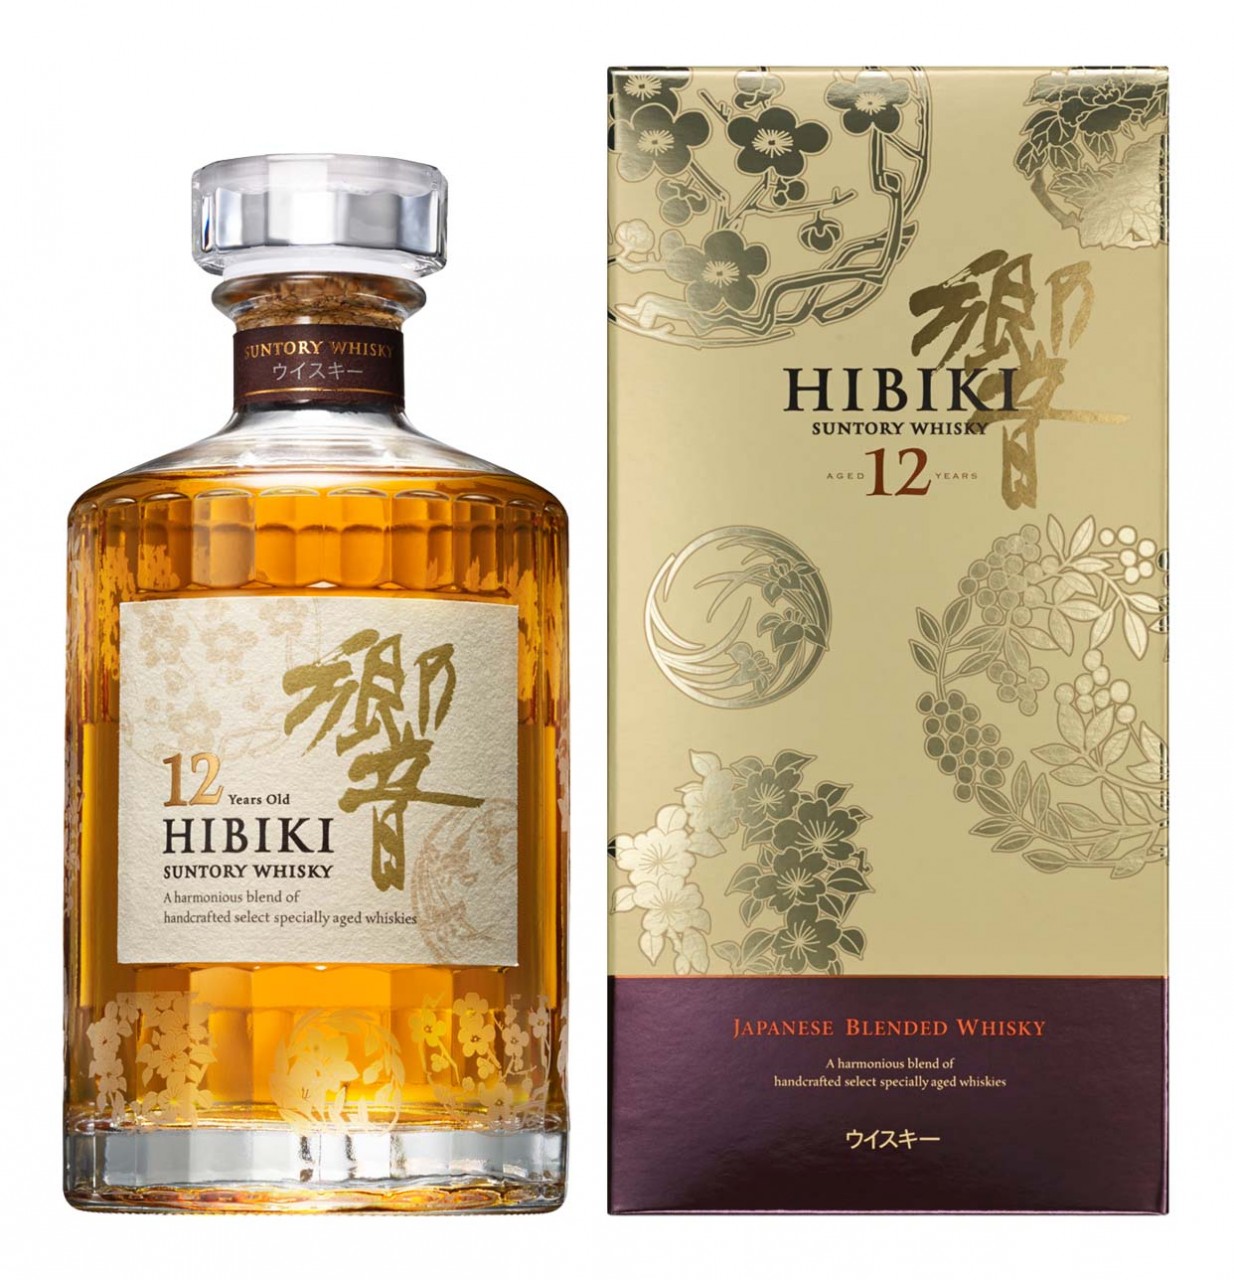 Suntory Hibiki 12Y Whisky special edition 三得利 響 12年花烏風月特別版